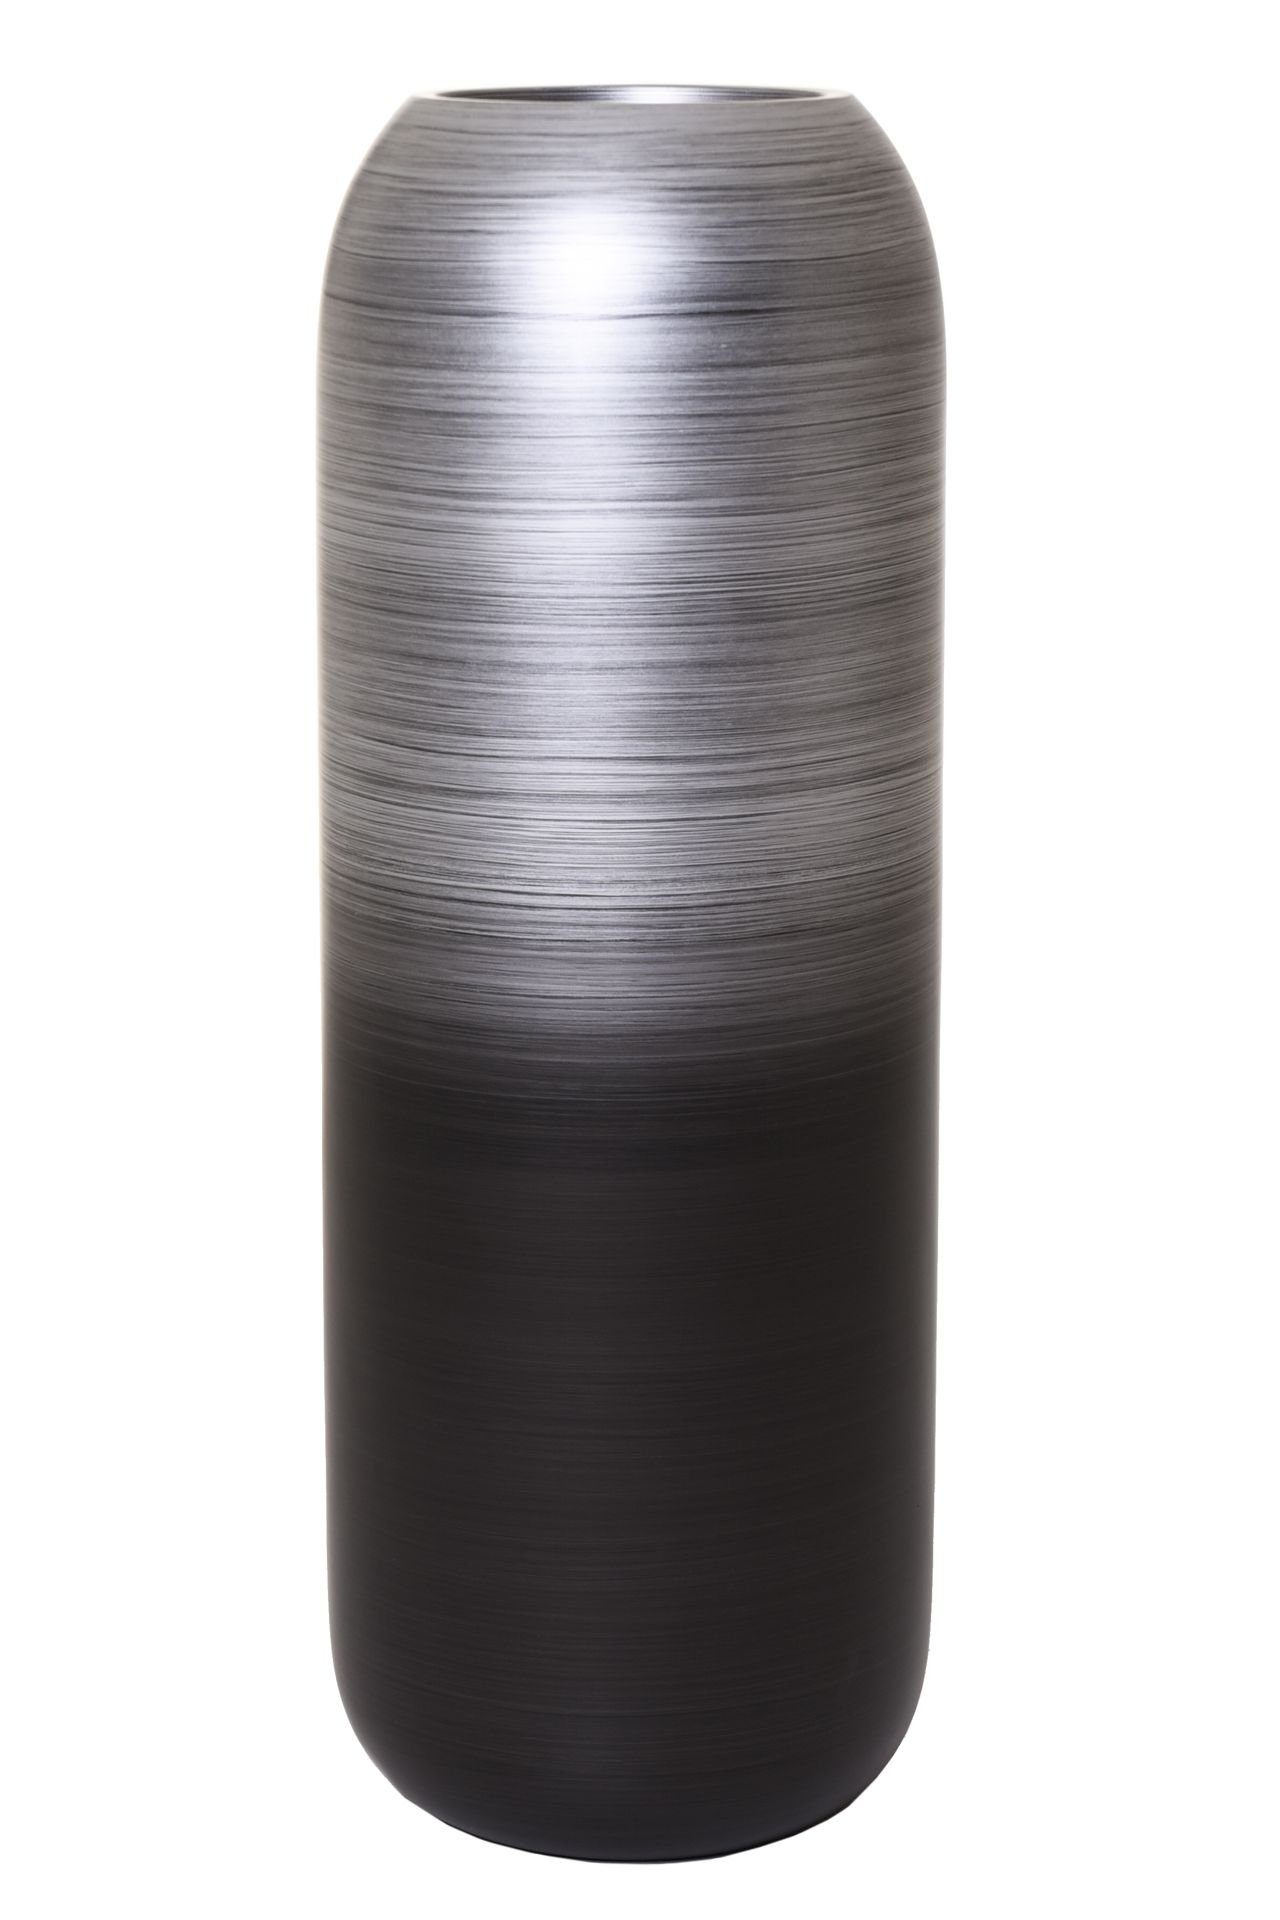 VIVANNO Bodenvase Bodenvase Pflanzkübel Fiberglas Schwarz-Silber - CHRONO Schwarz Seidenmatt Silber